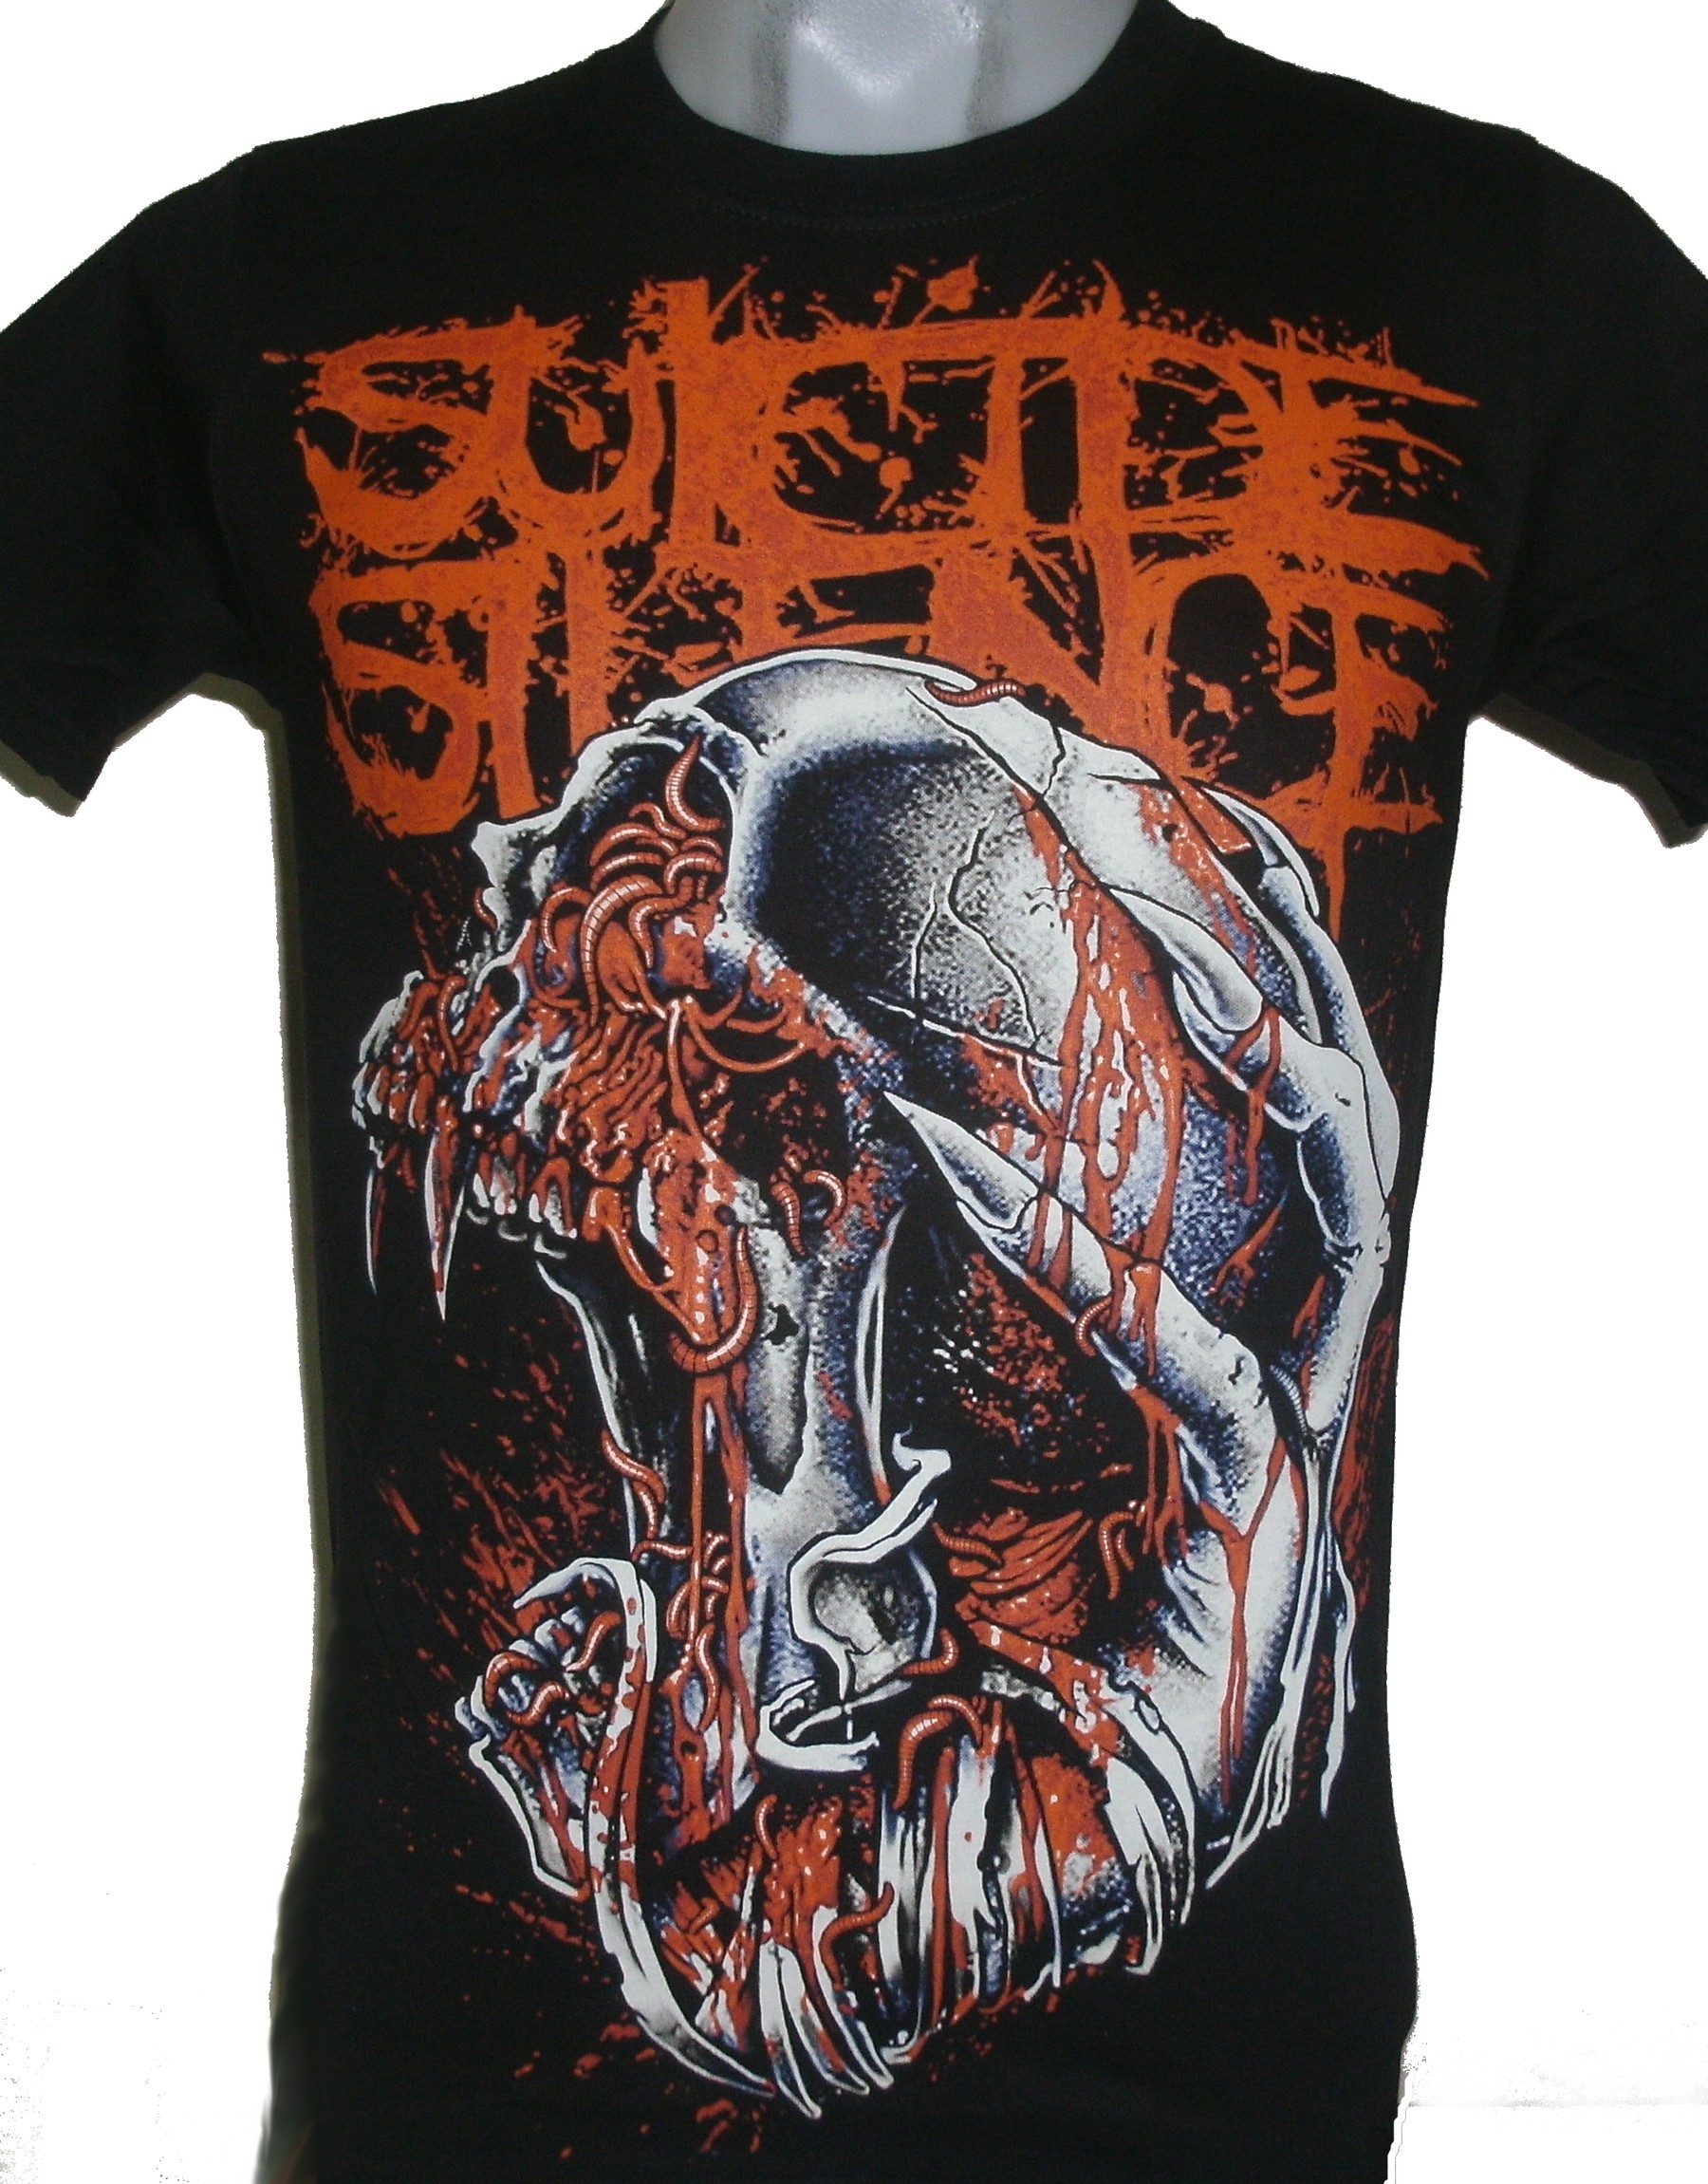 Suicide Silence t-shirt size XL